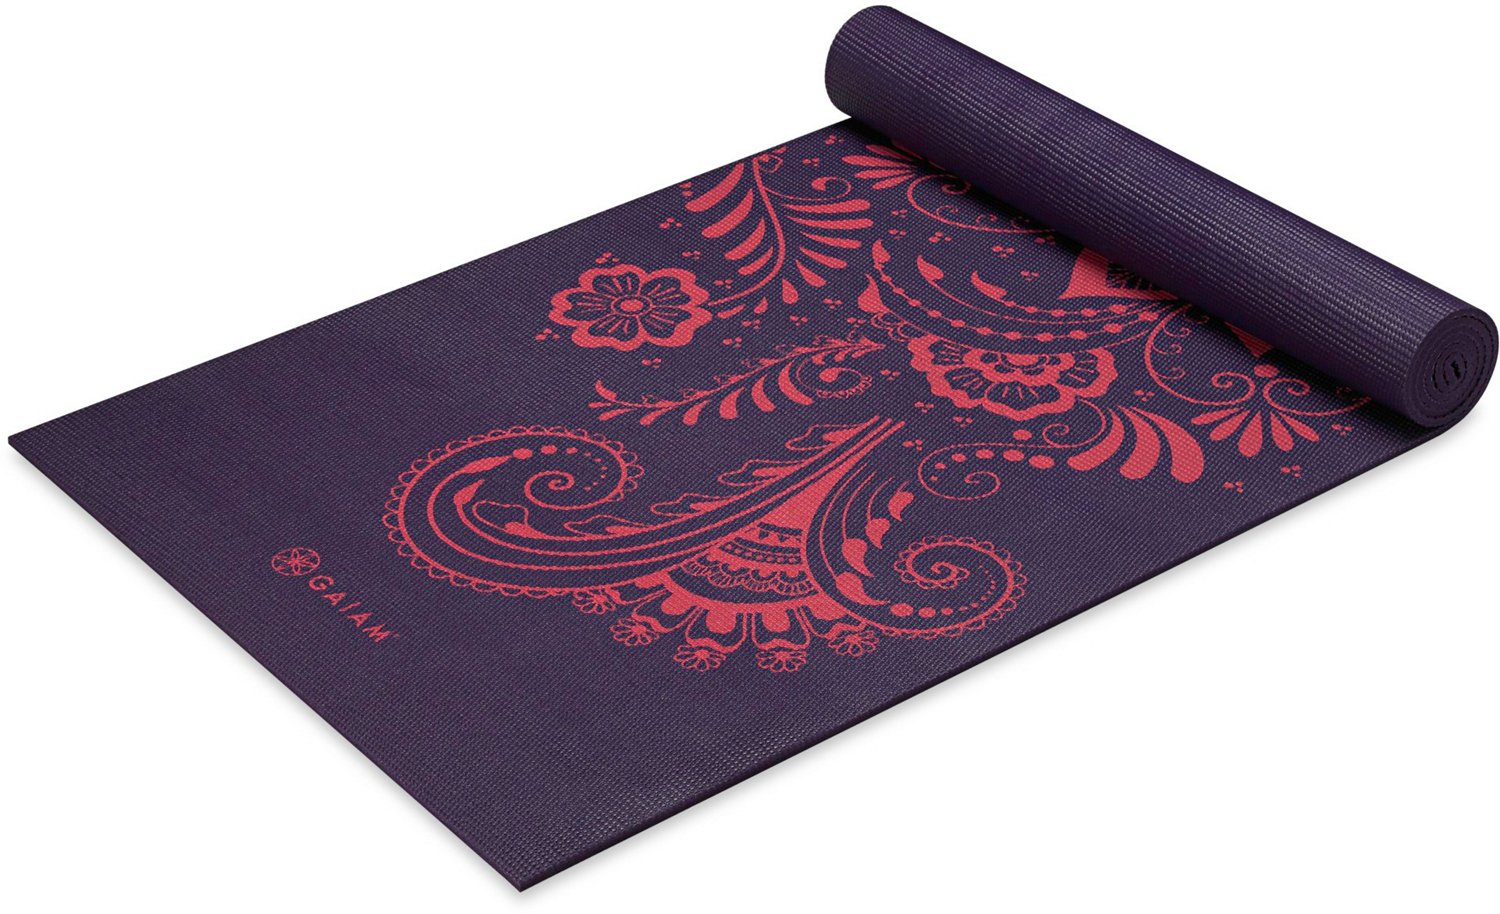 Gaiam Reversible Aubergine Swirl 24 x 68 x 0.24 in Yoga Mat